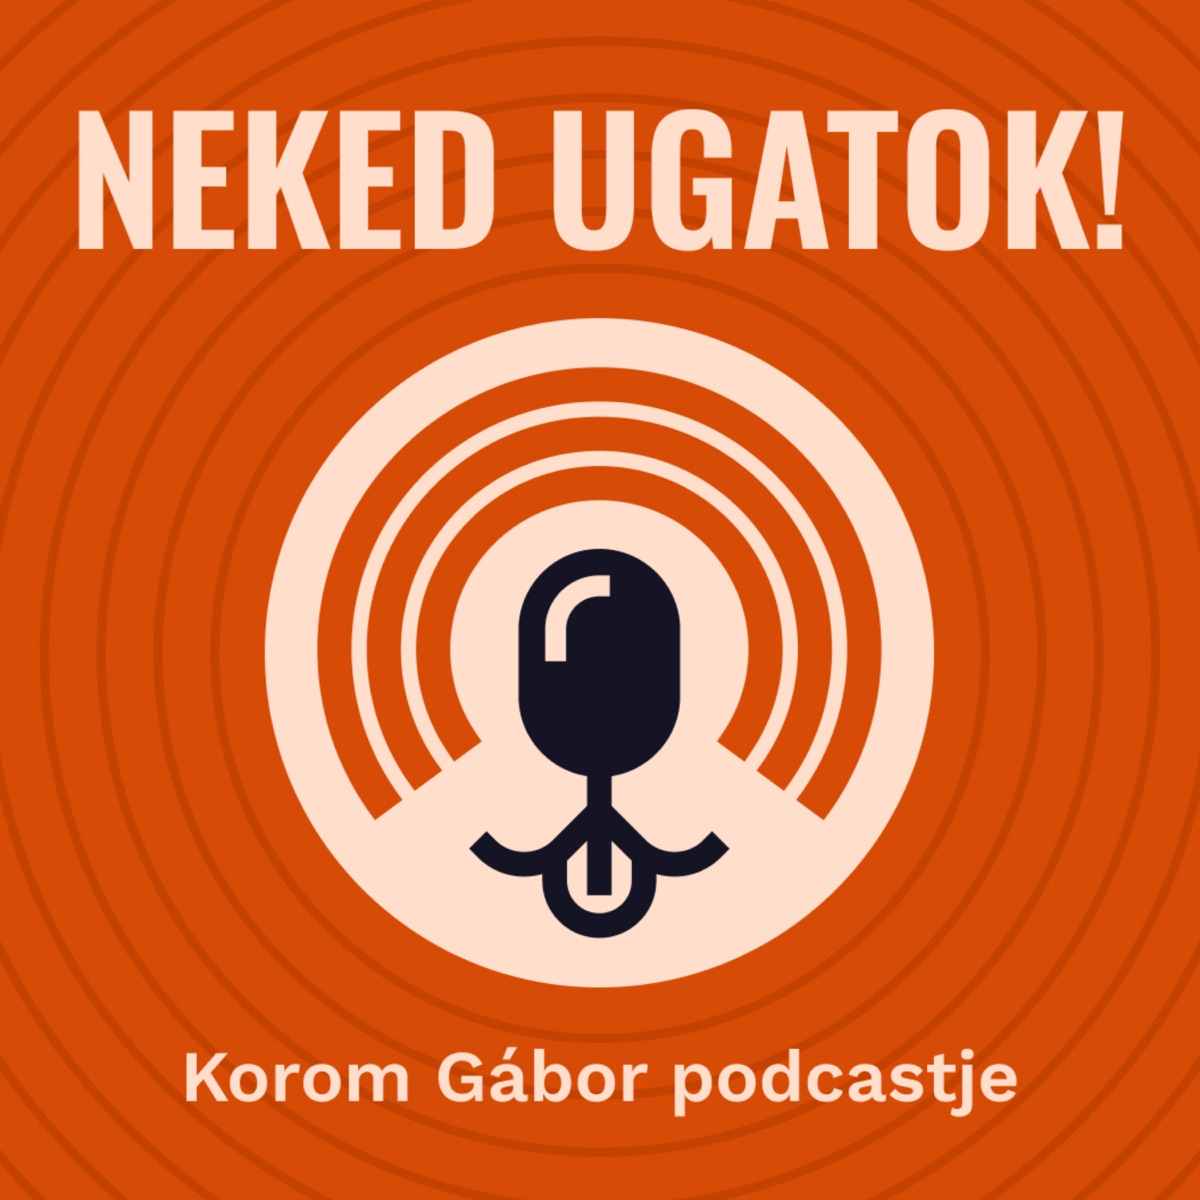 Neked Ugatok! – Podcast – Podtail